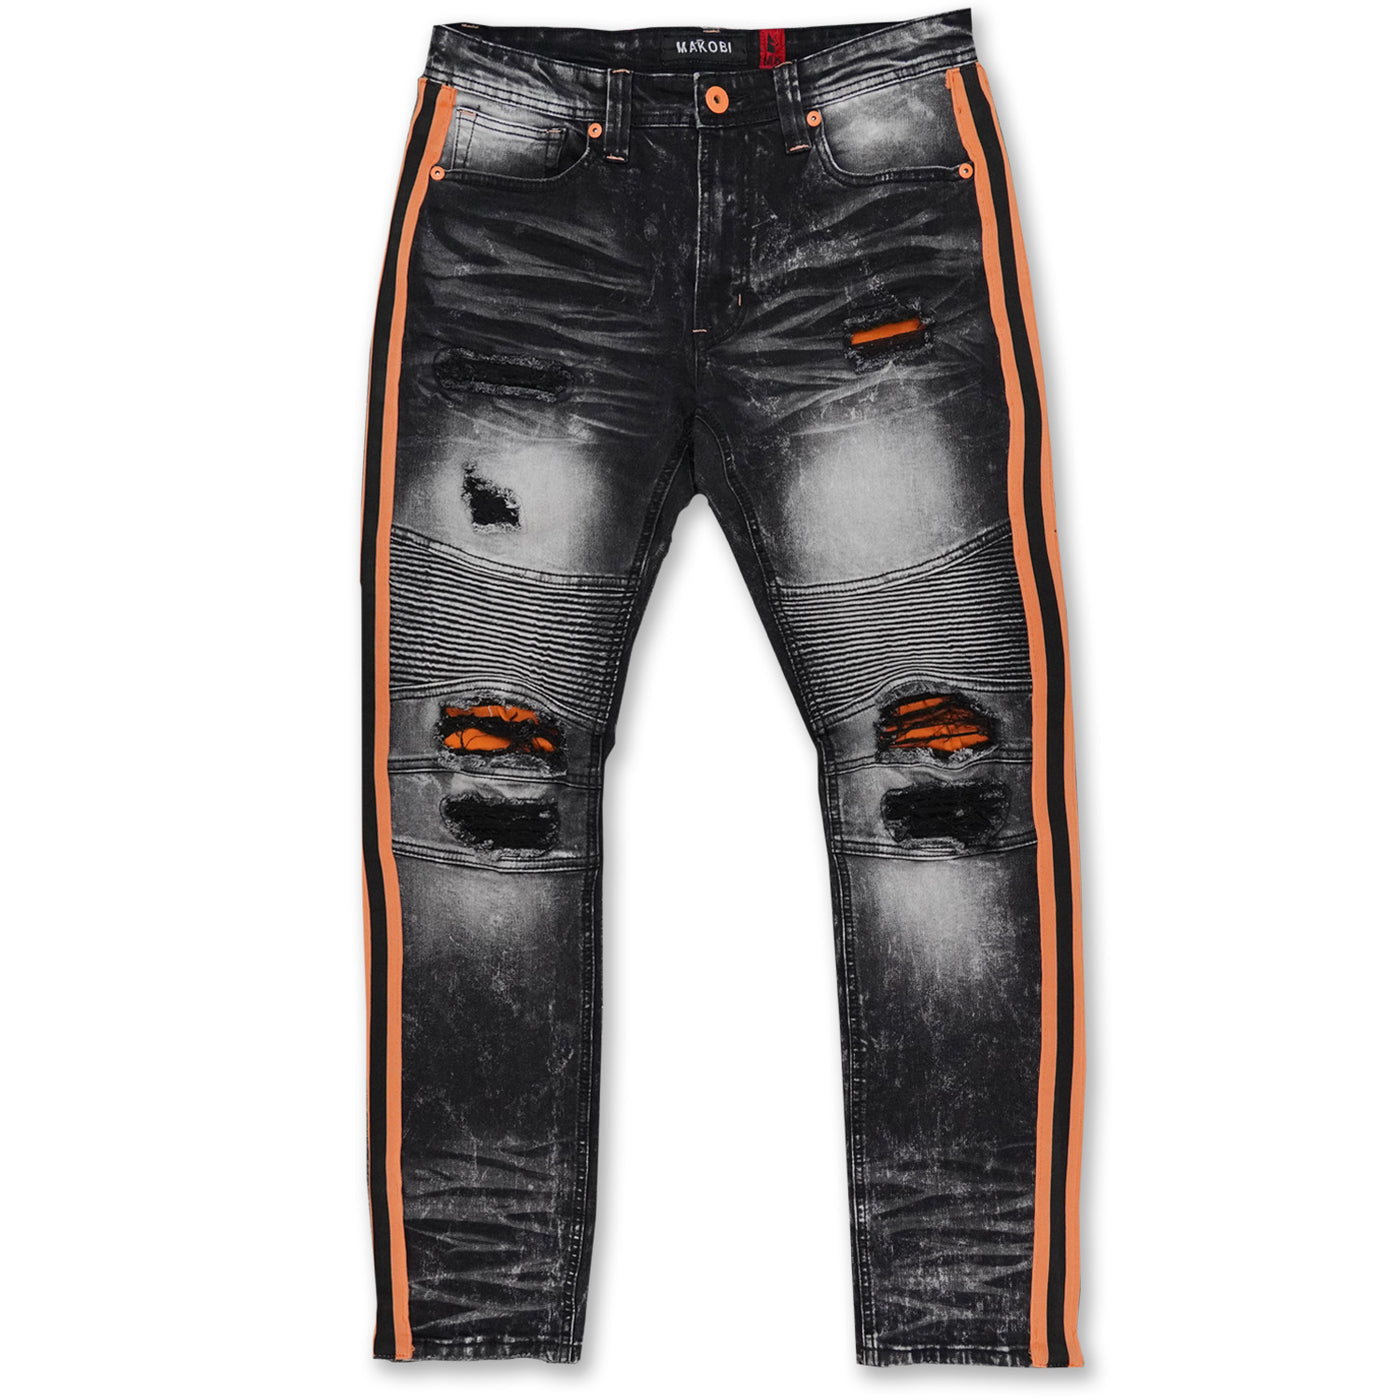 M1986 Ozarks Shredded Jeans w/ Side Tapes - Black/Peach